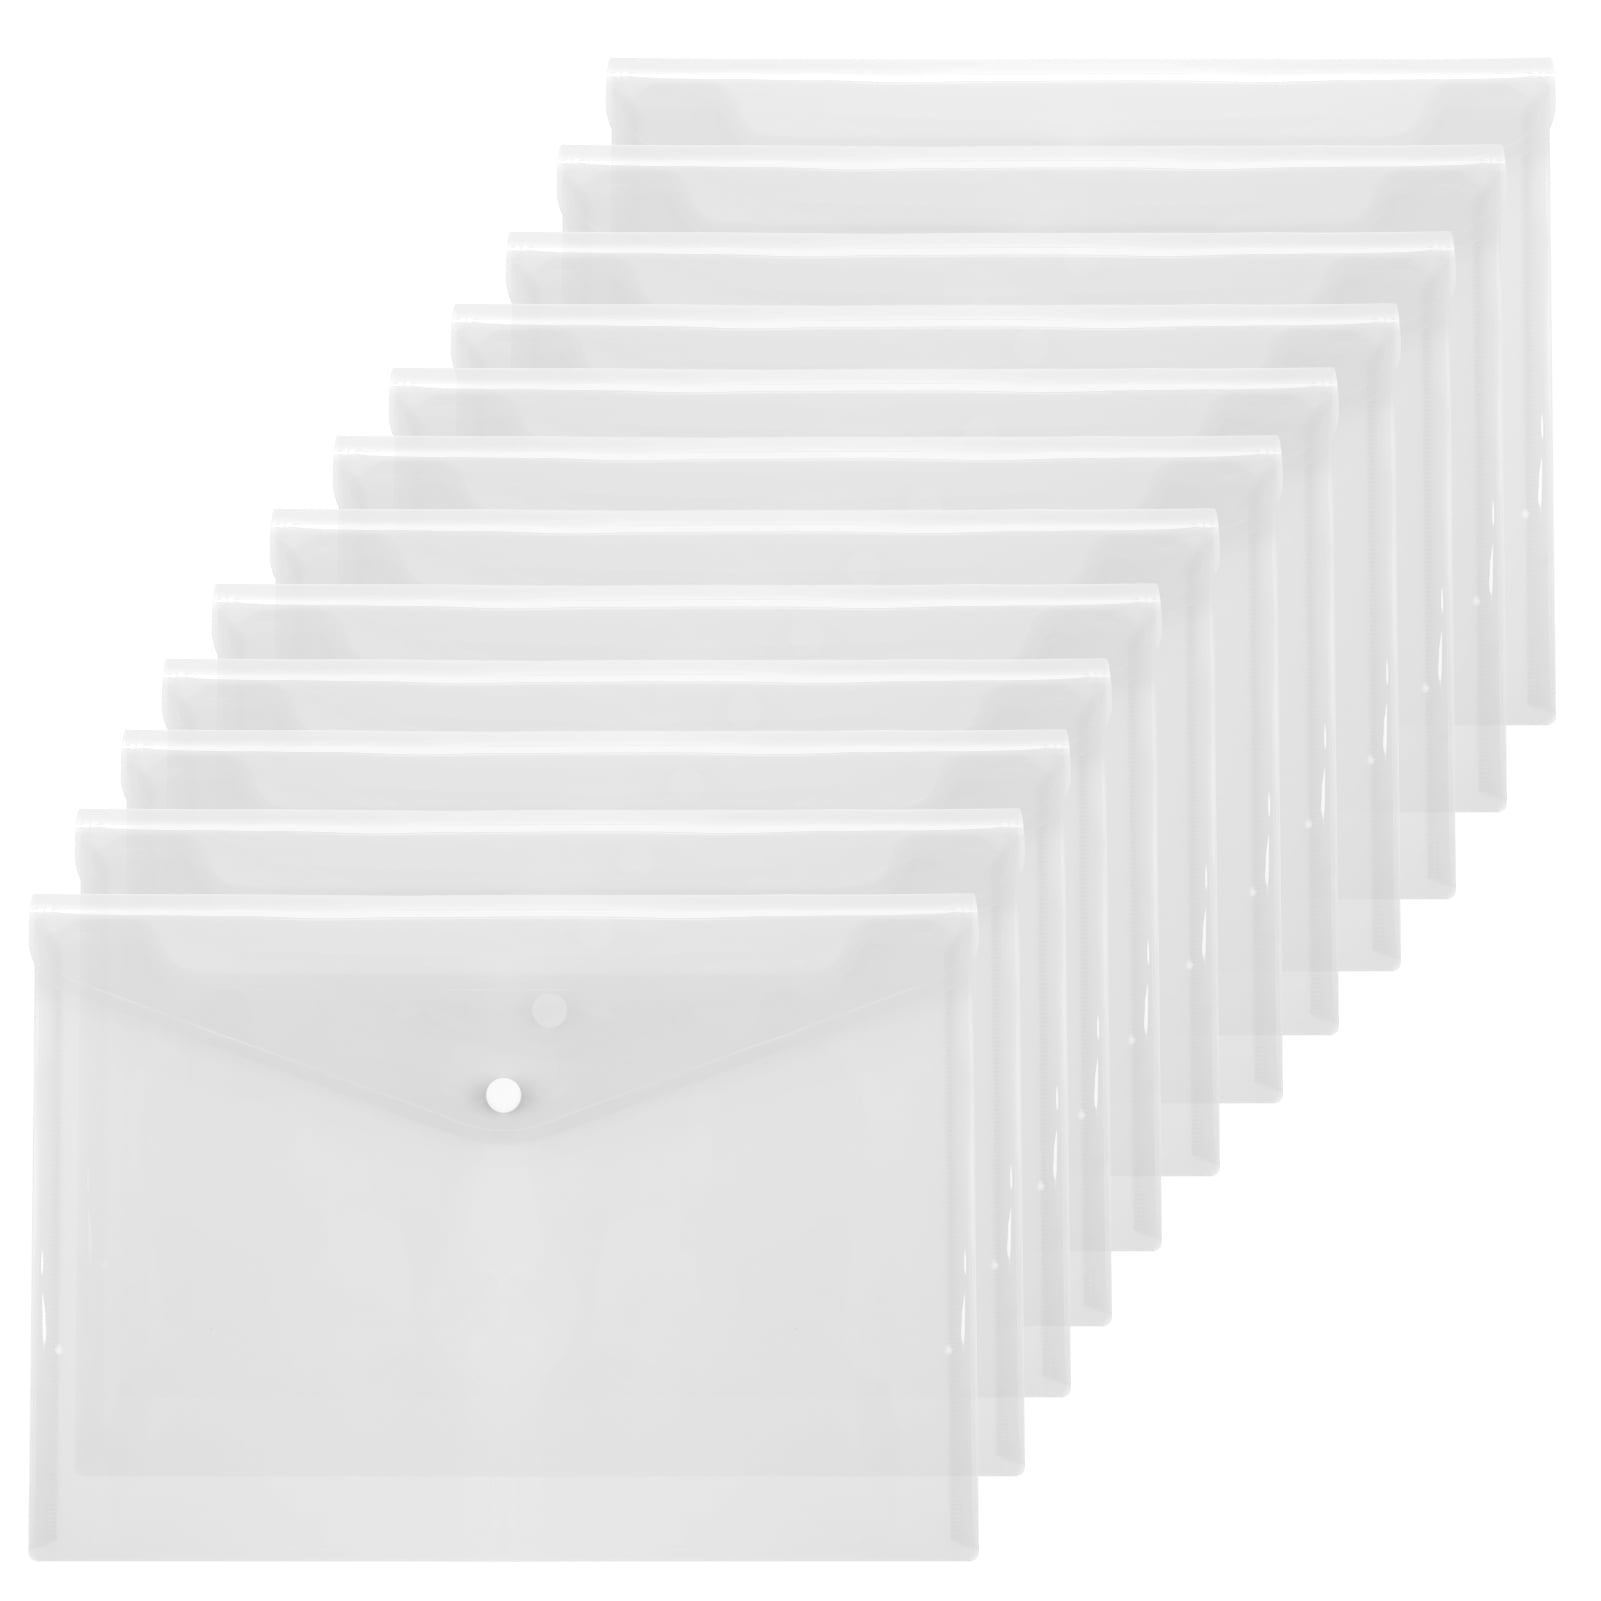 Imitation Linen Canvas File Bag Button Closure Bag Office Document Folder New 